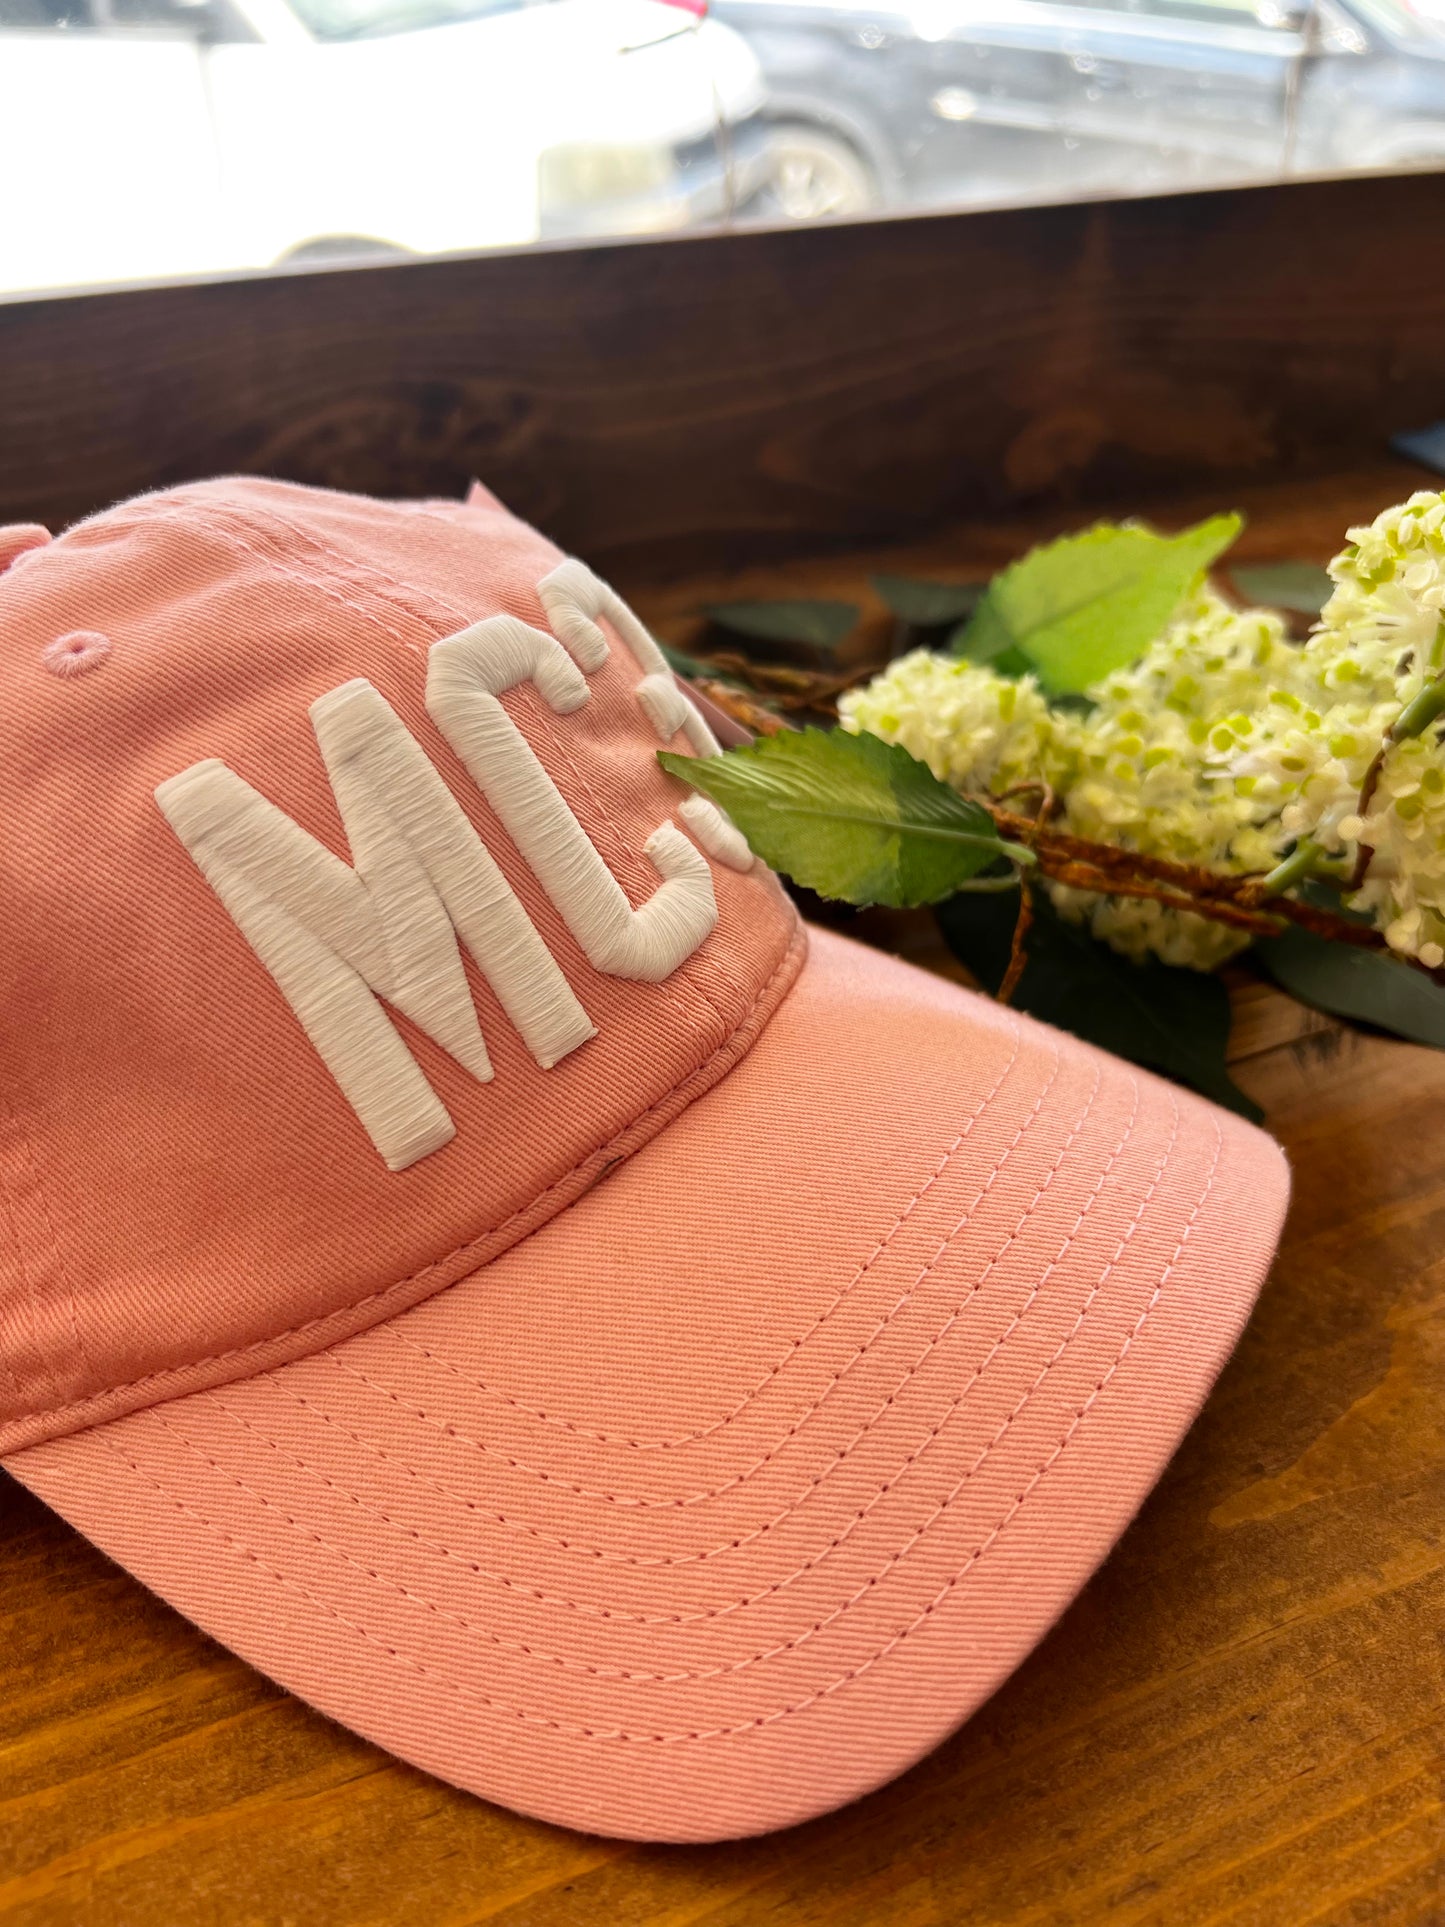 MC3 Hat